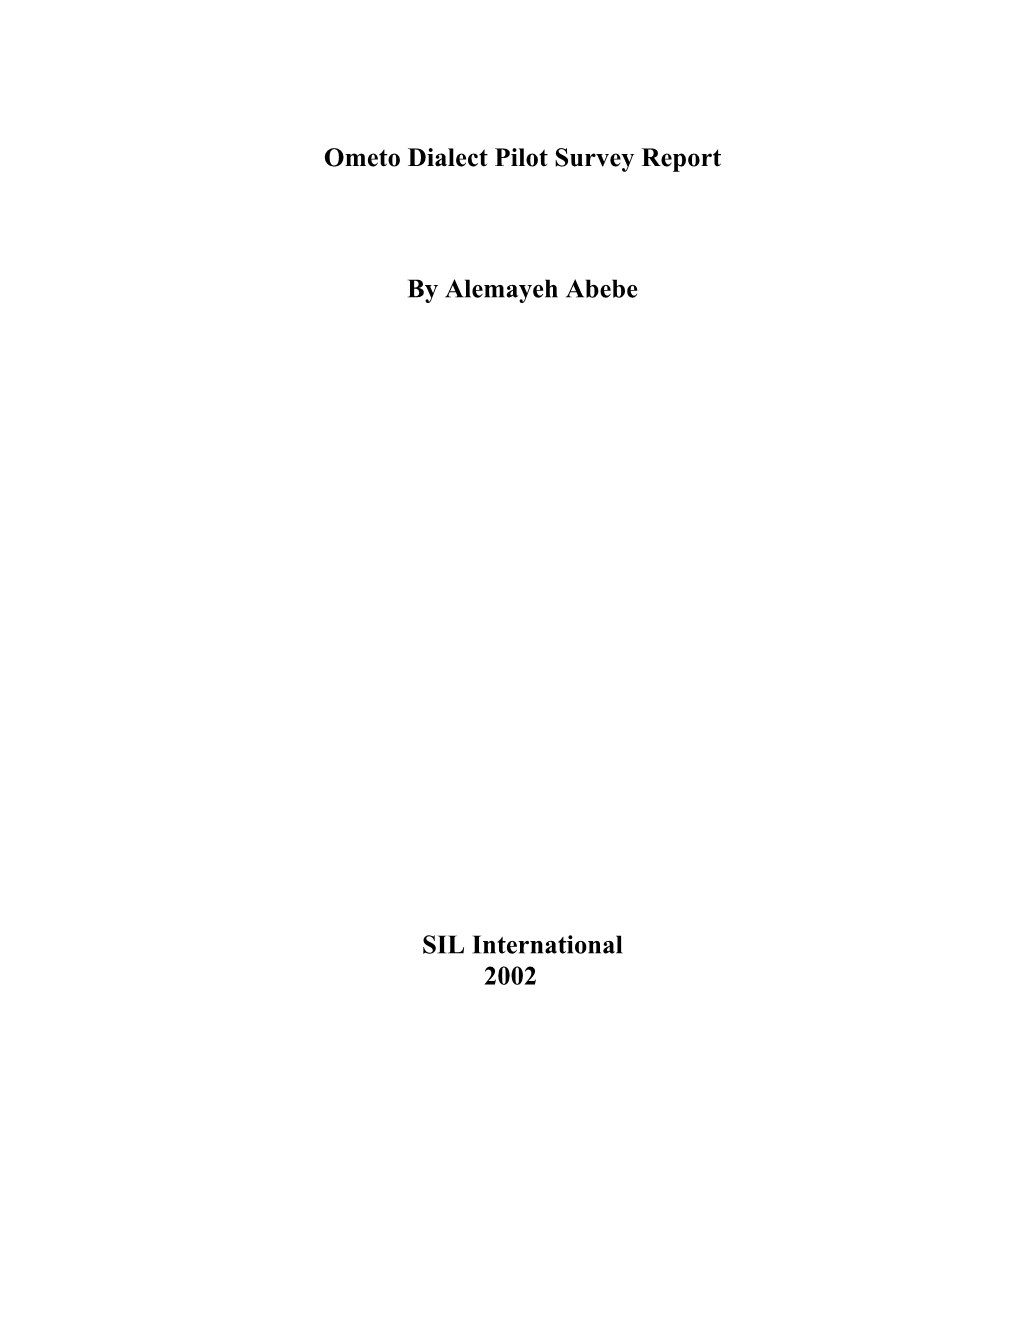 Ometo Dialect Pilot Survey Report by Alemayeh Abebe SIL International